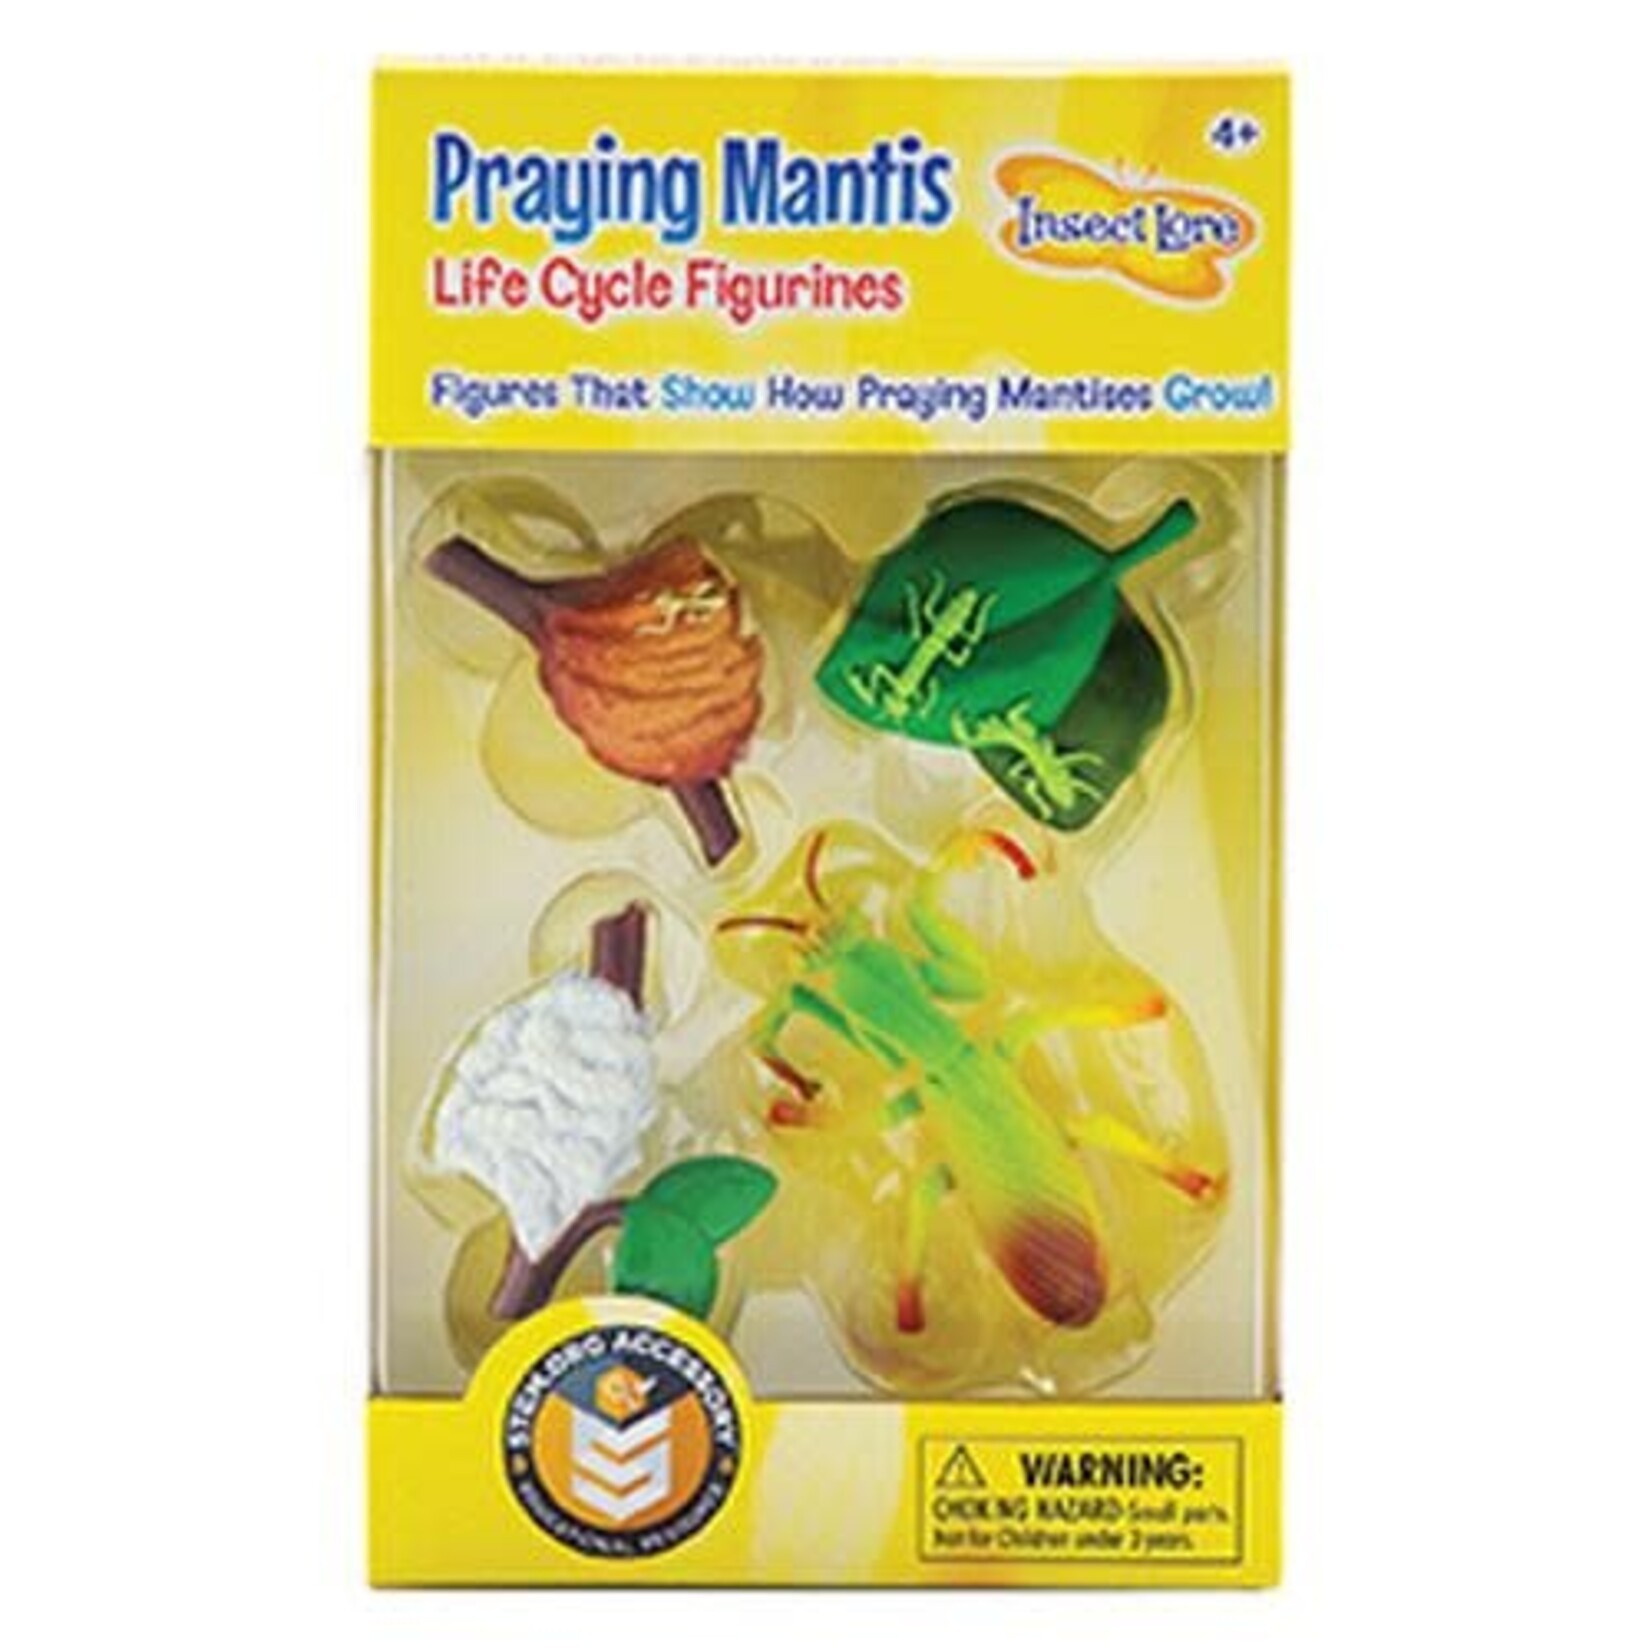 Praying Mantis Life Cycle Figurines